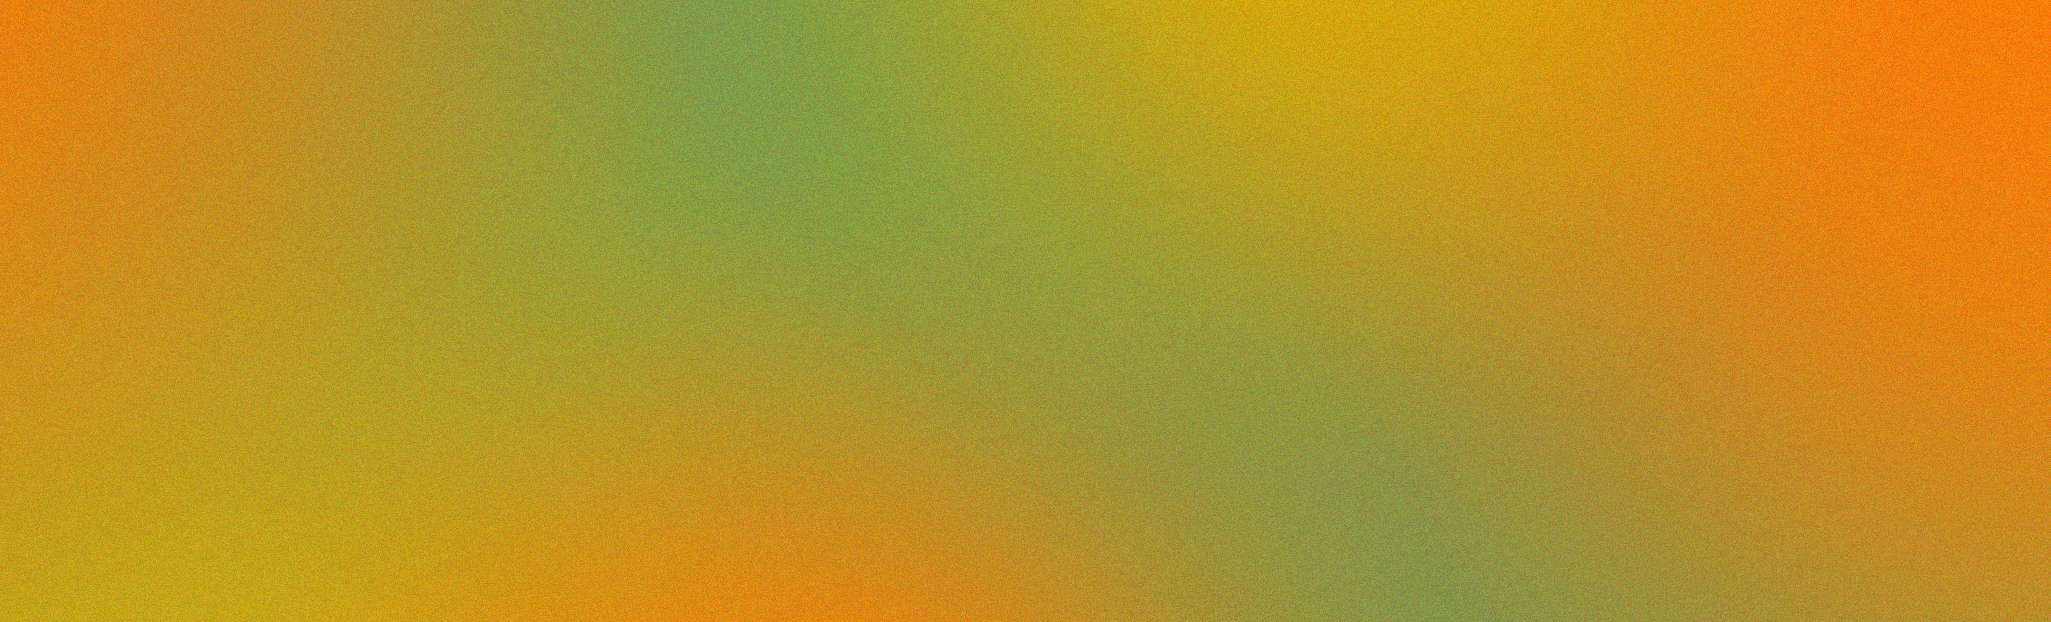 green yellow orange gradient background